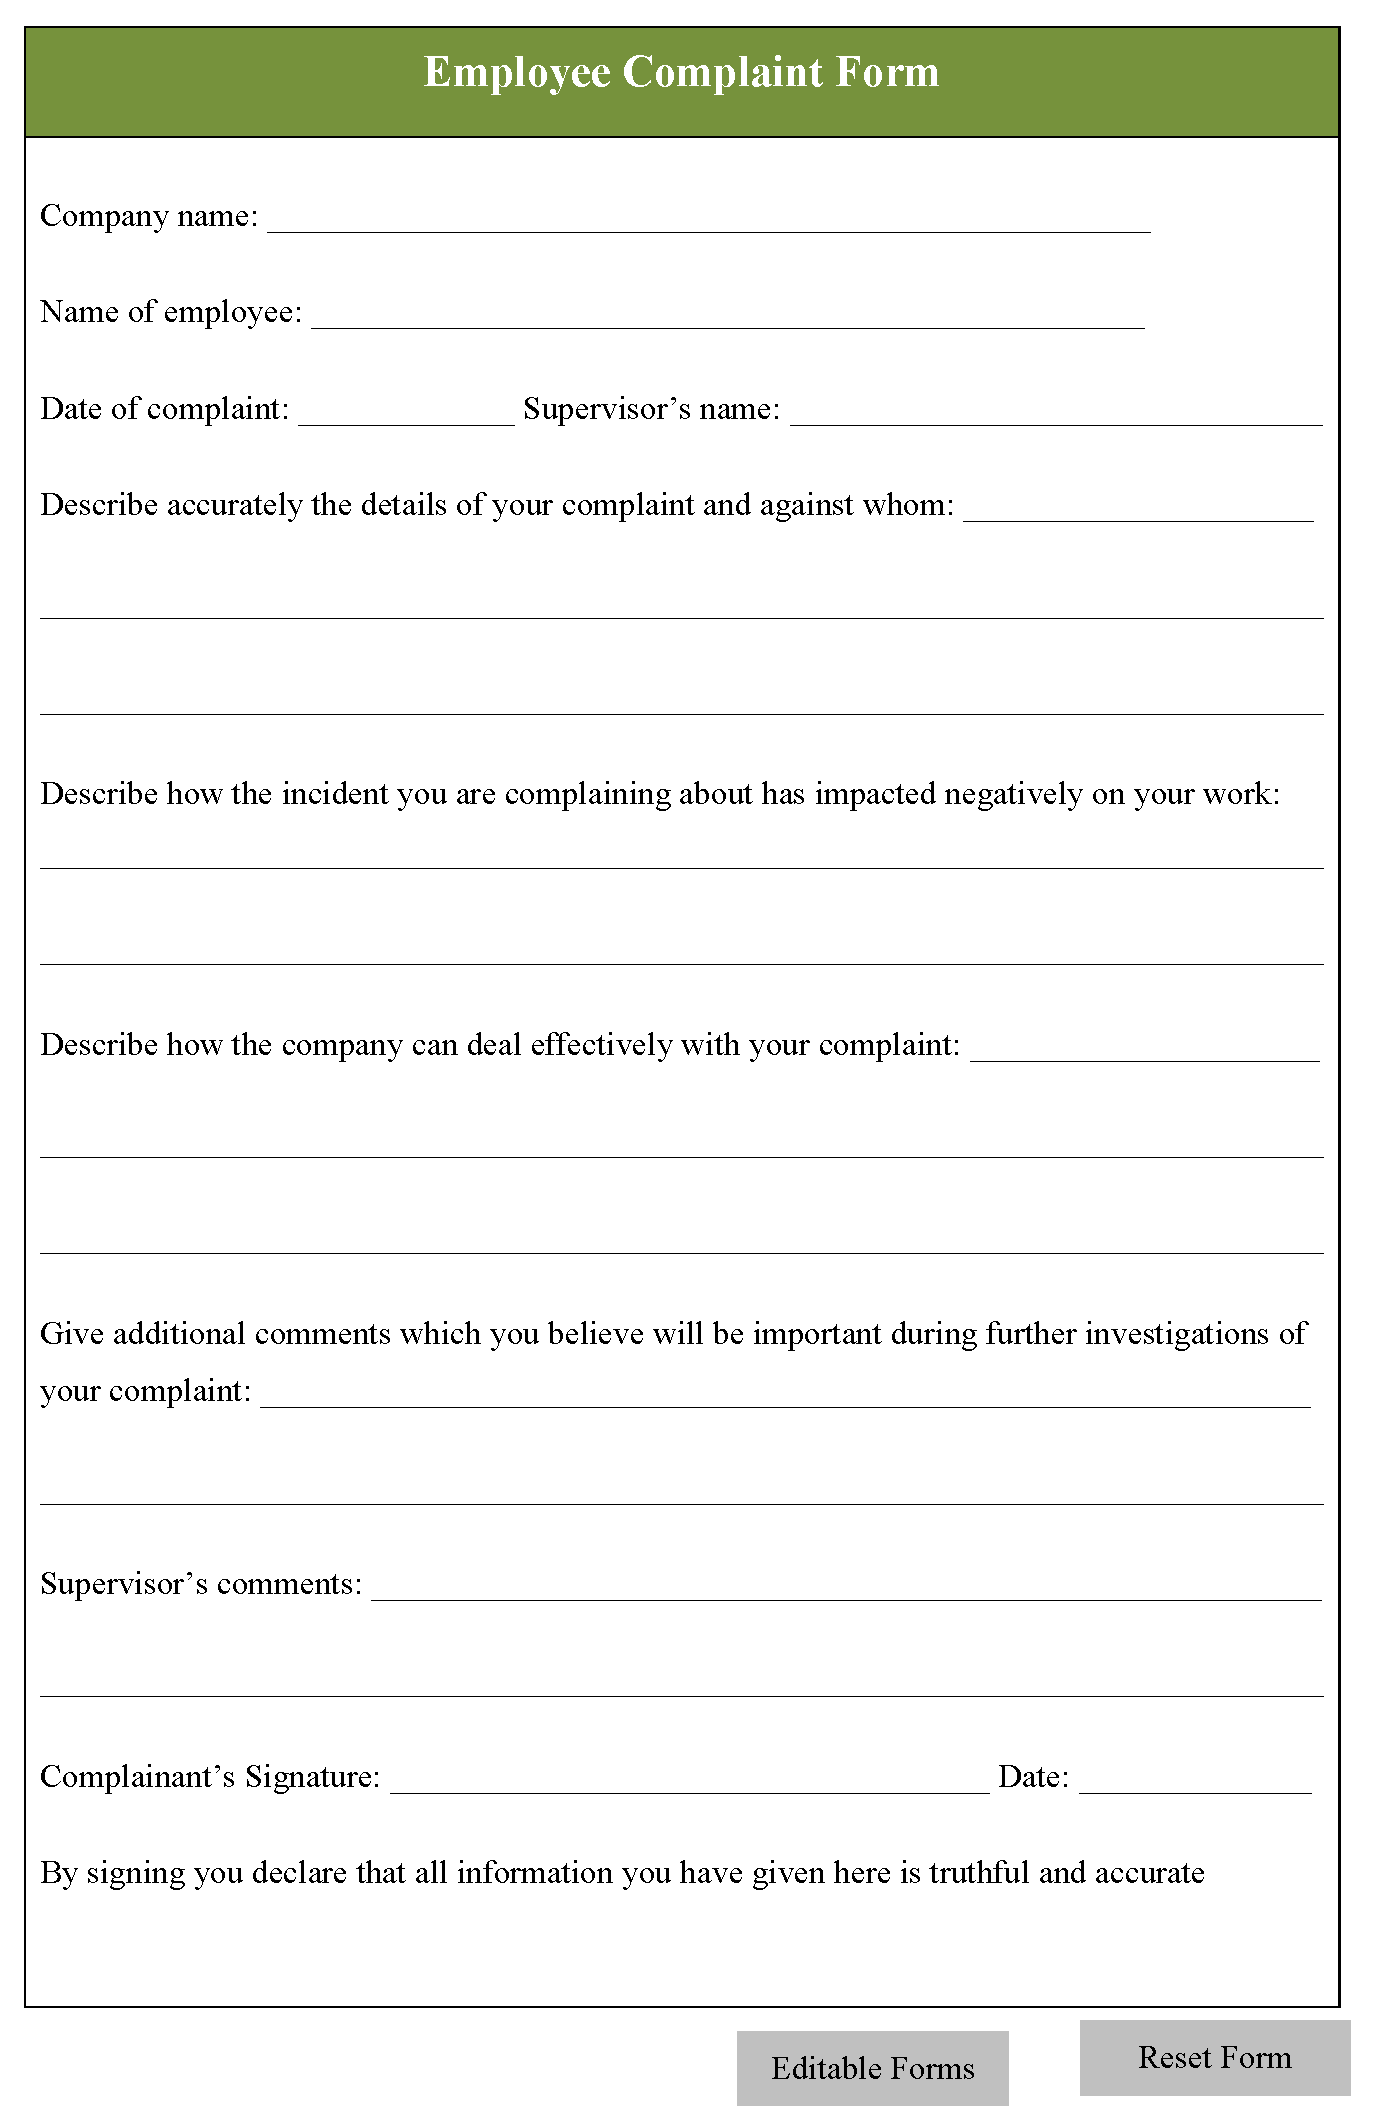 hr-employee-complaint-form-how-to-make-an-hr-employee-complaint-form-download-this-printable